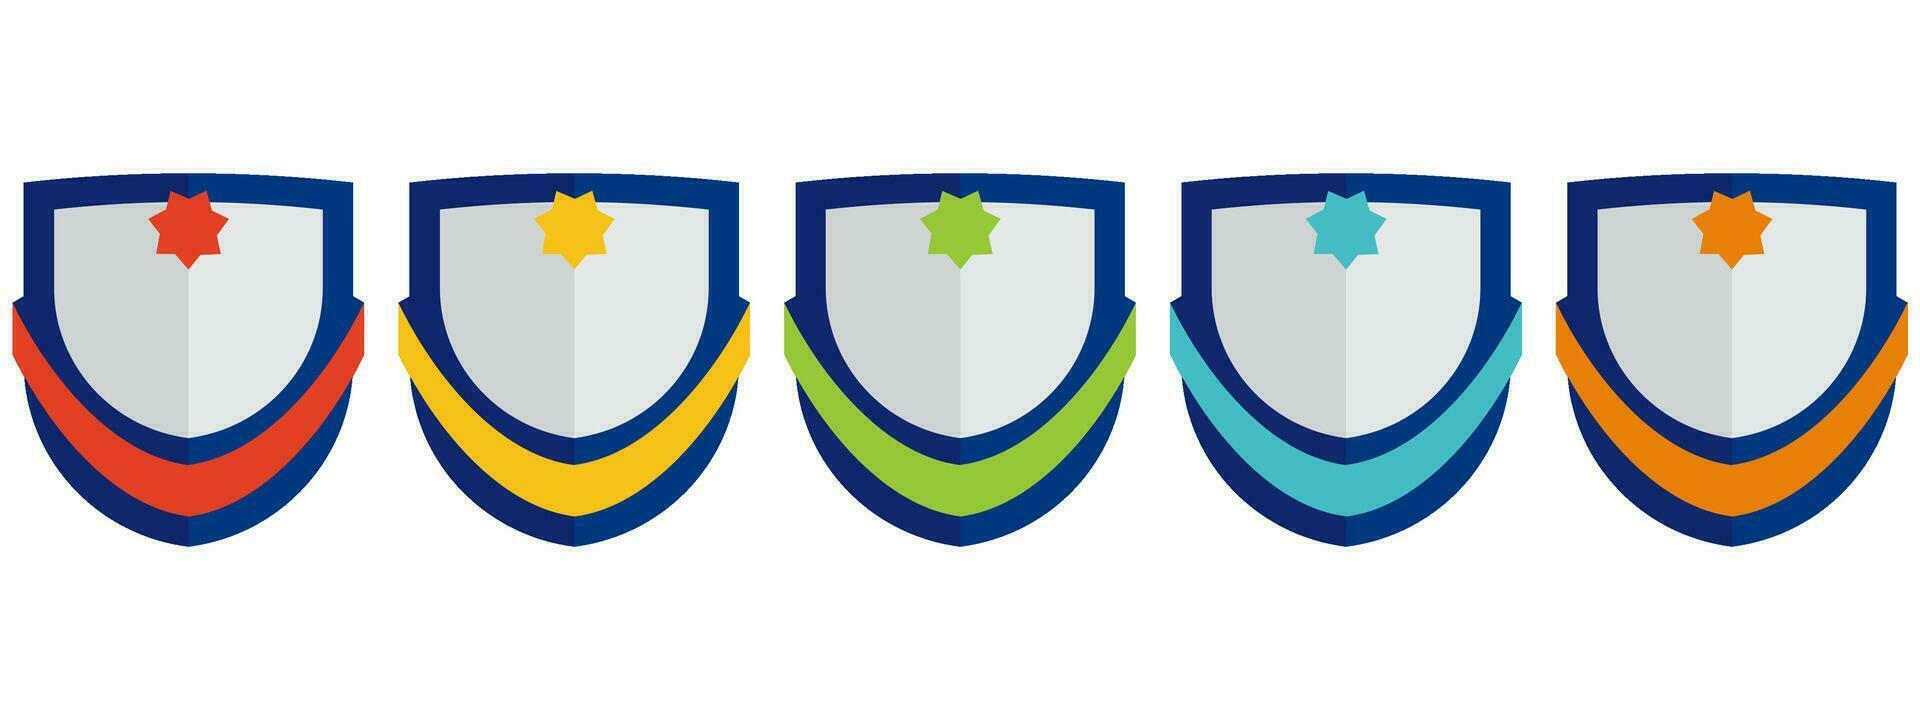 Set of company badge certificates. Vector illustration certified logo design